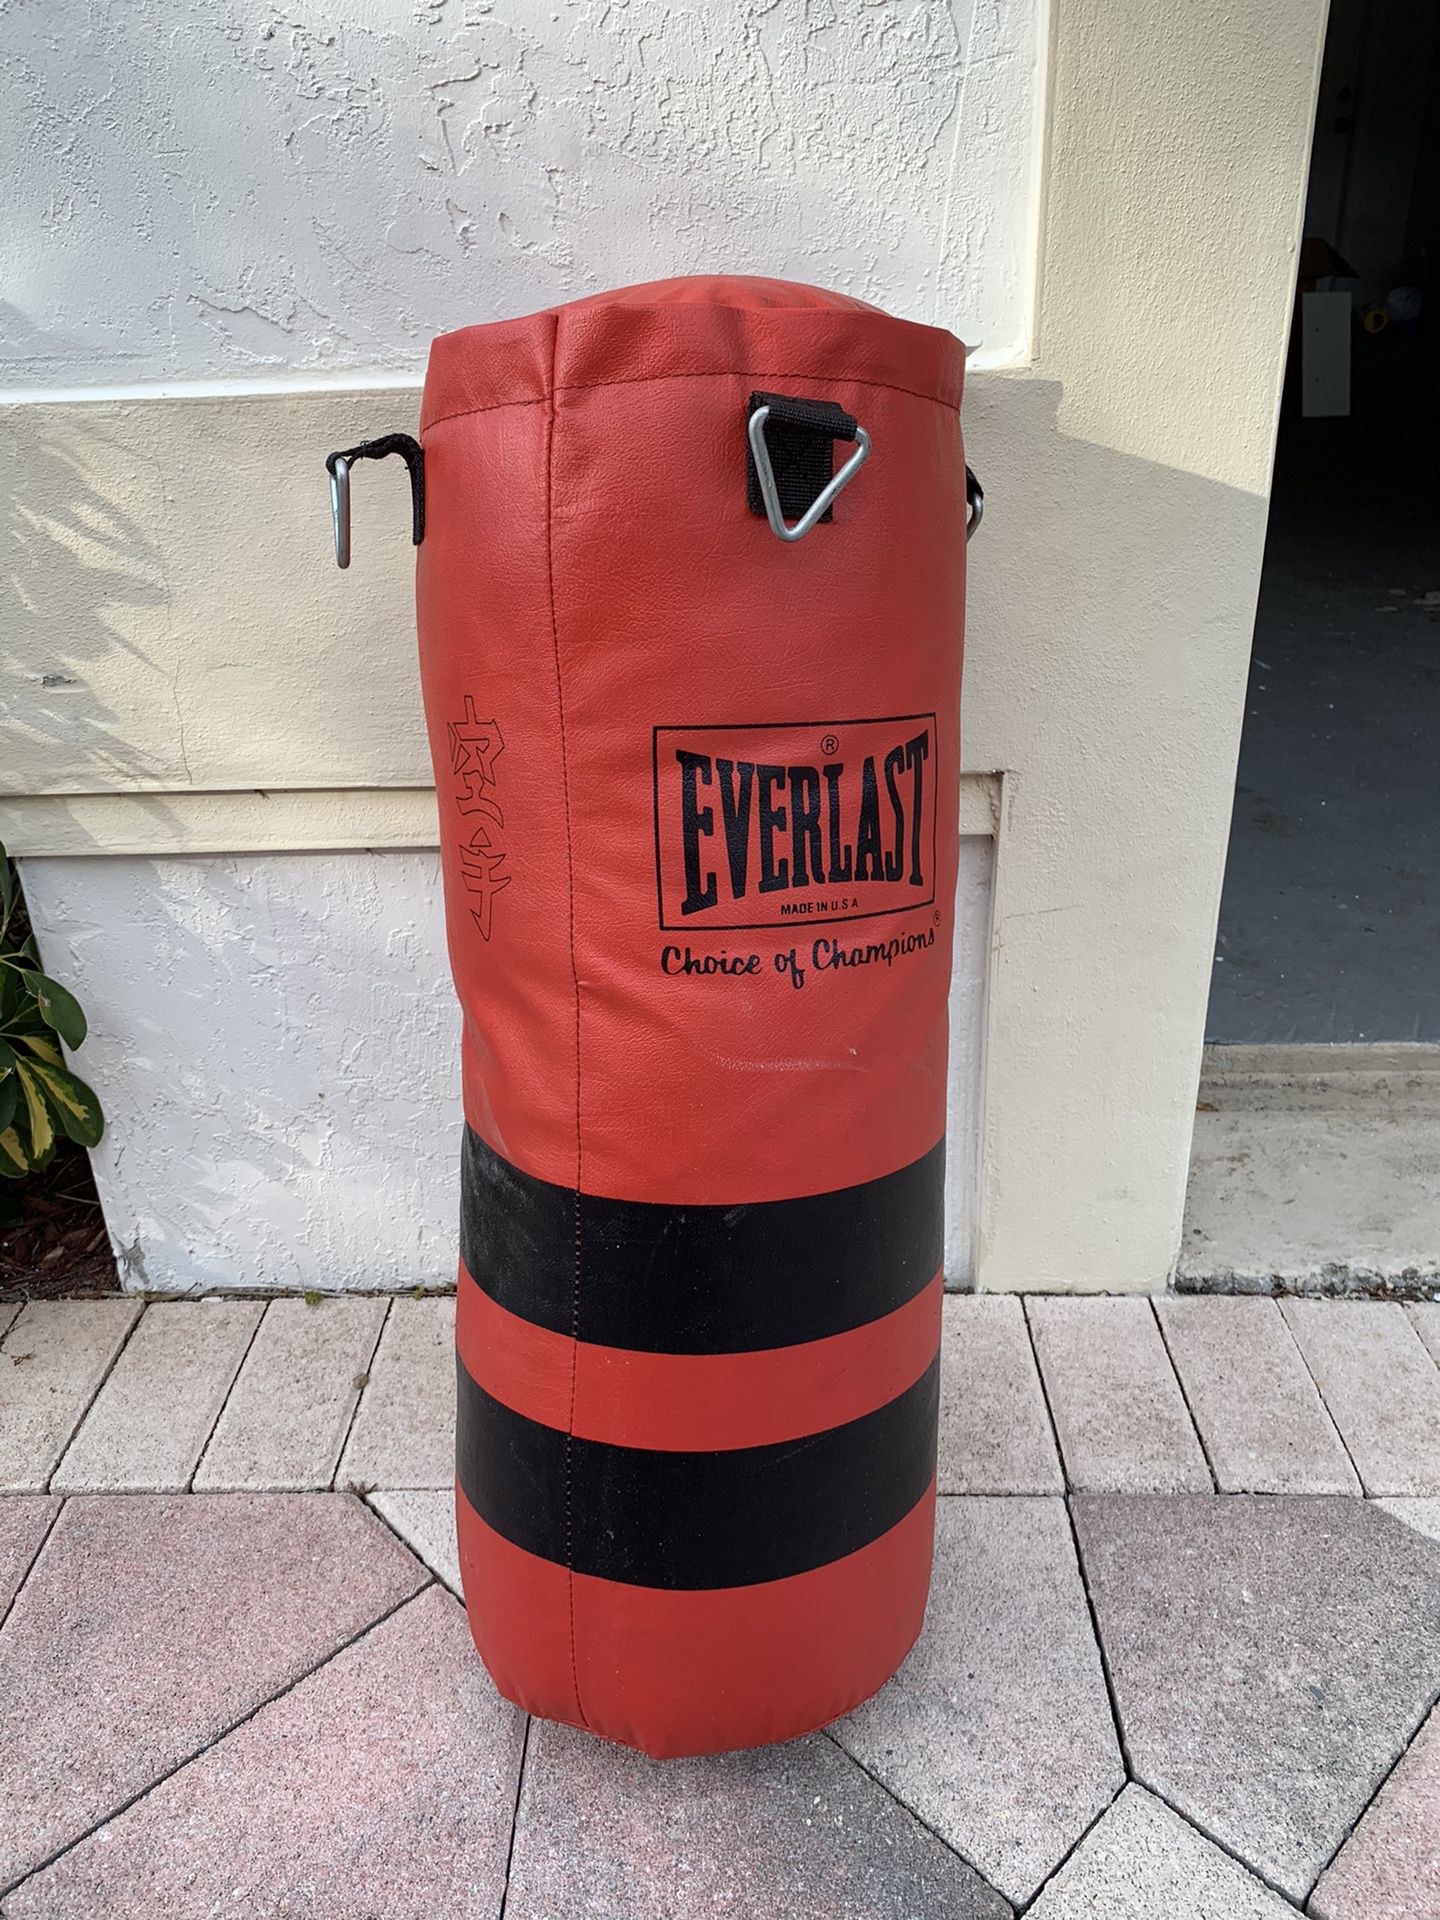 Everlast Heavy punching bags